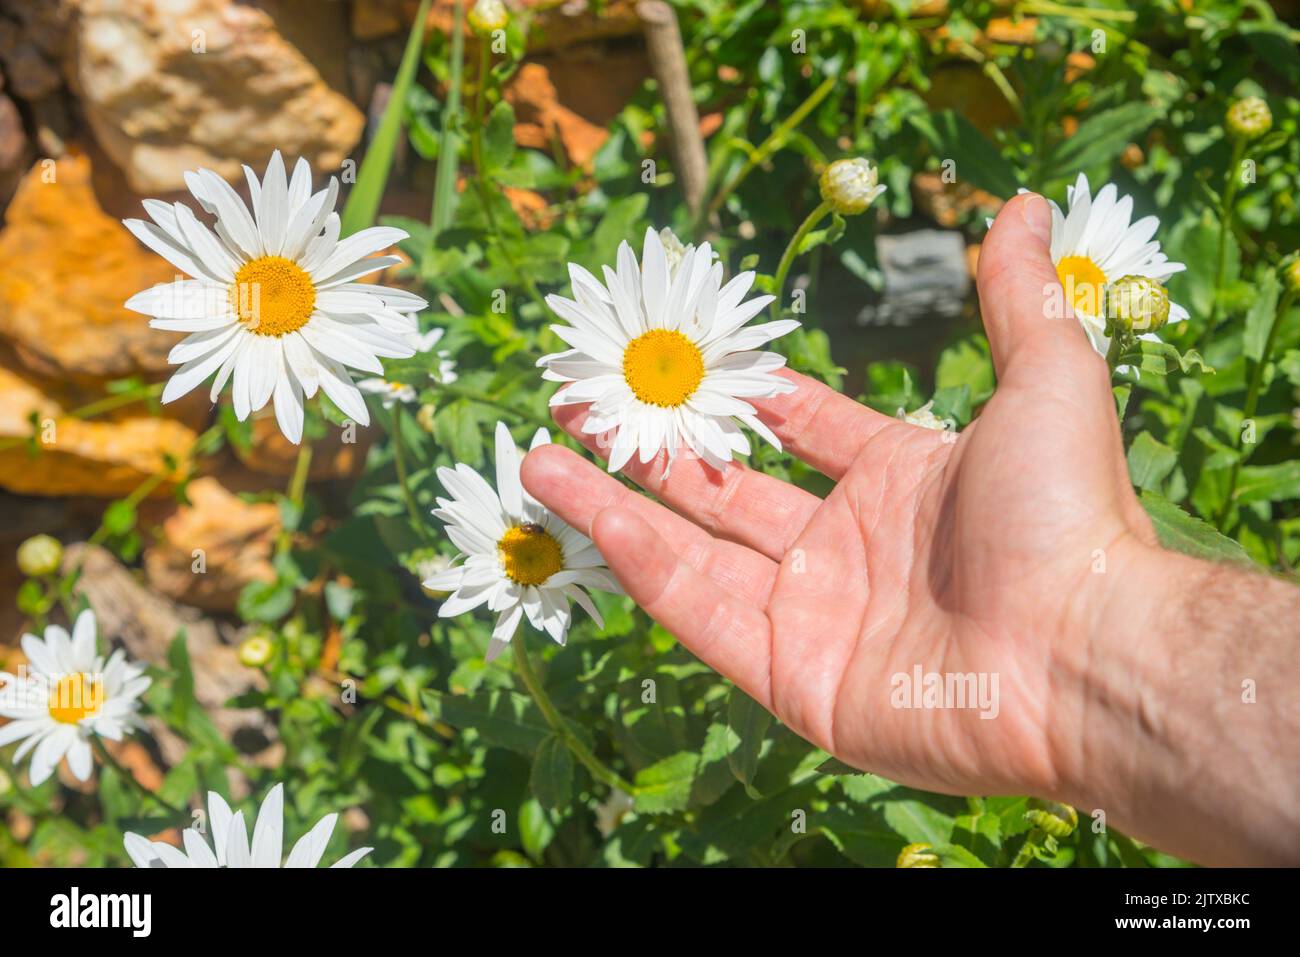 Man’s hand holding a daisy flower. Stock Photo